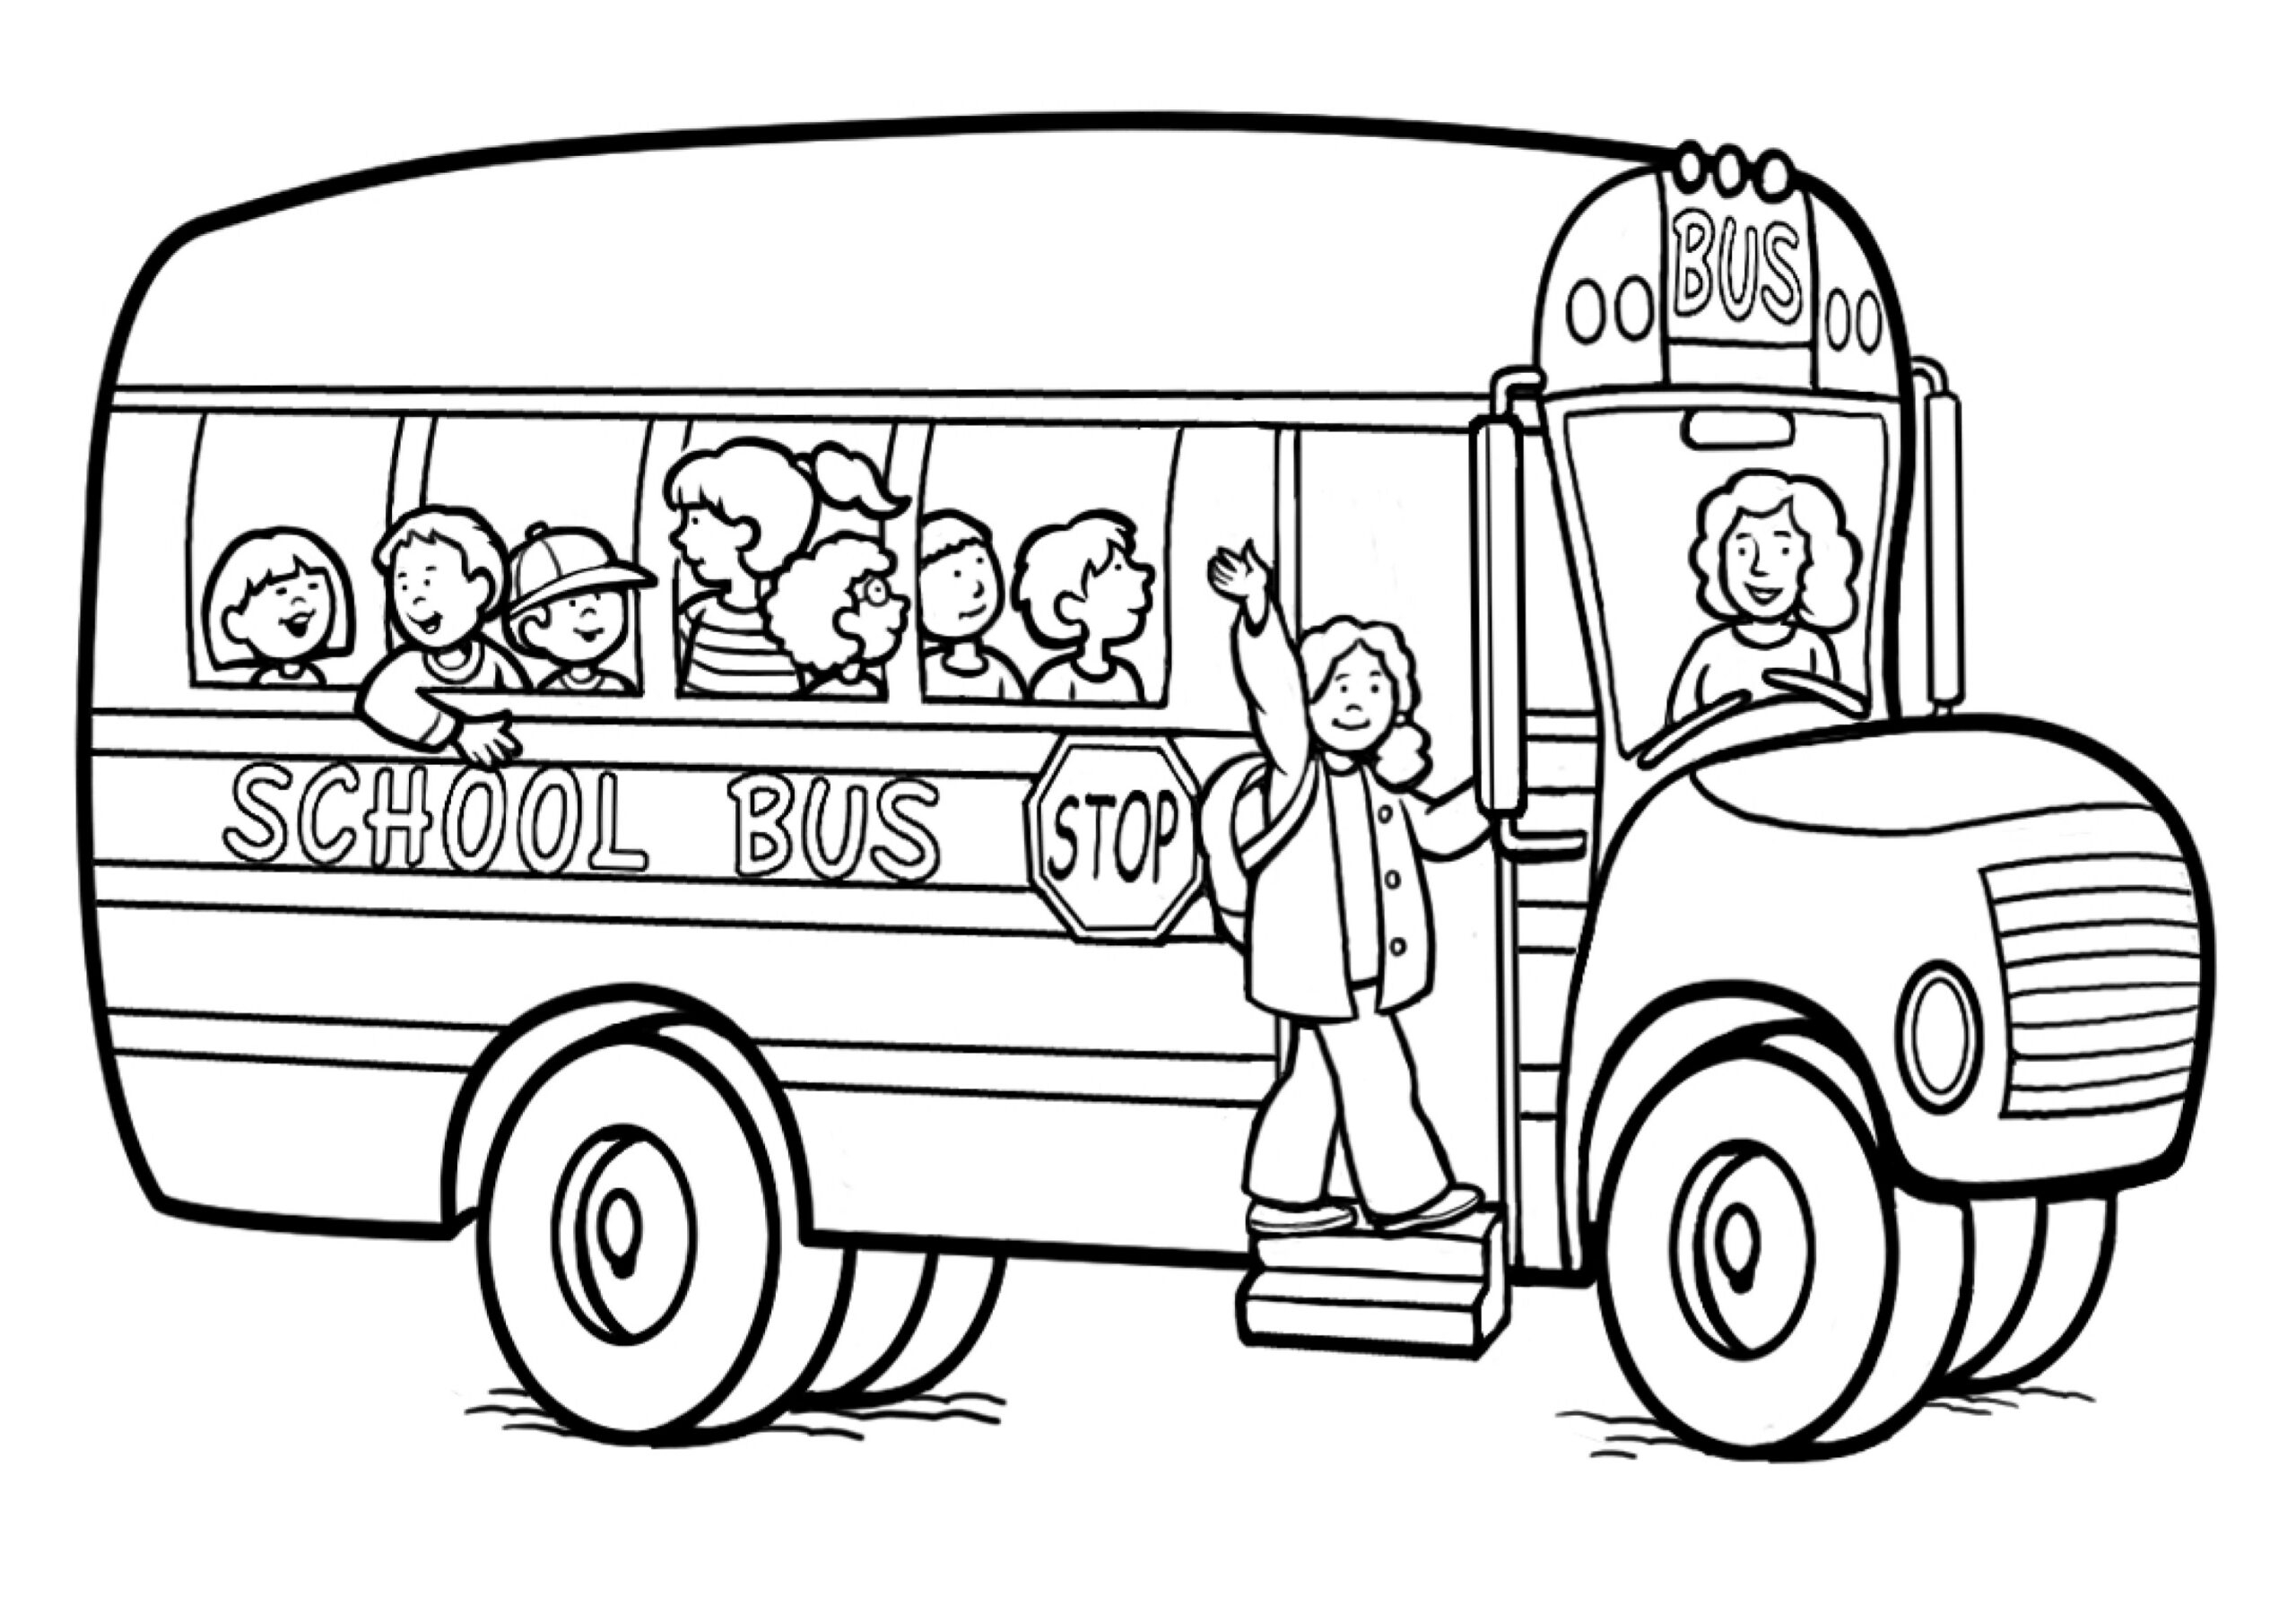 Mewarnai Gambar Sketsa Bus Sekolah